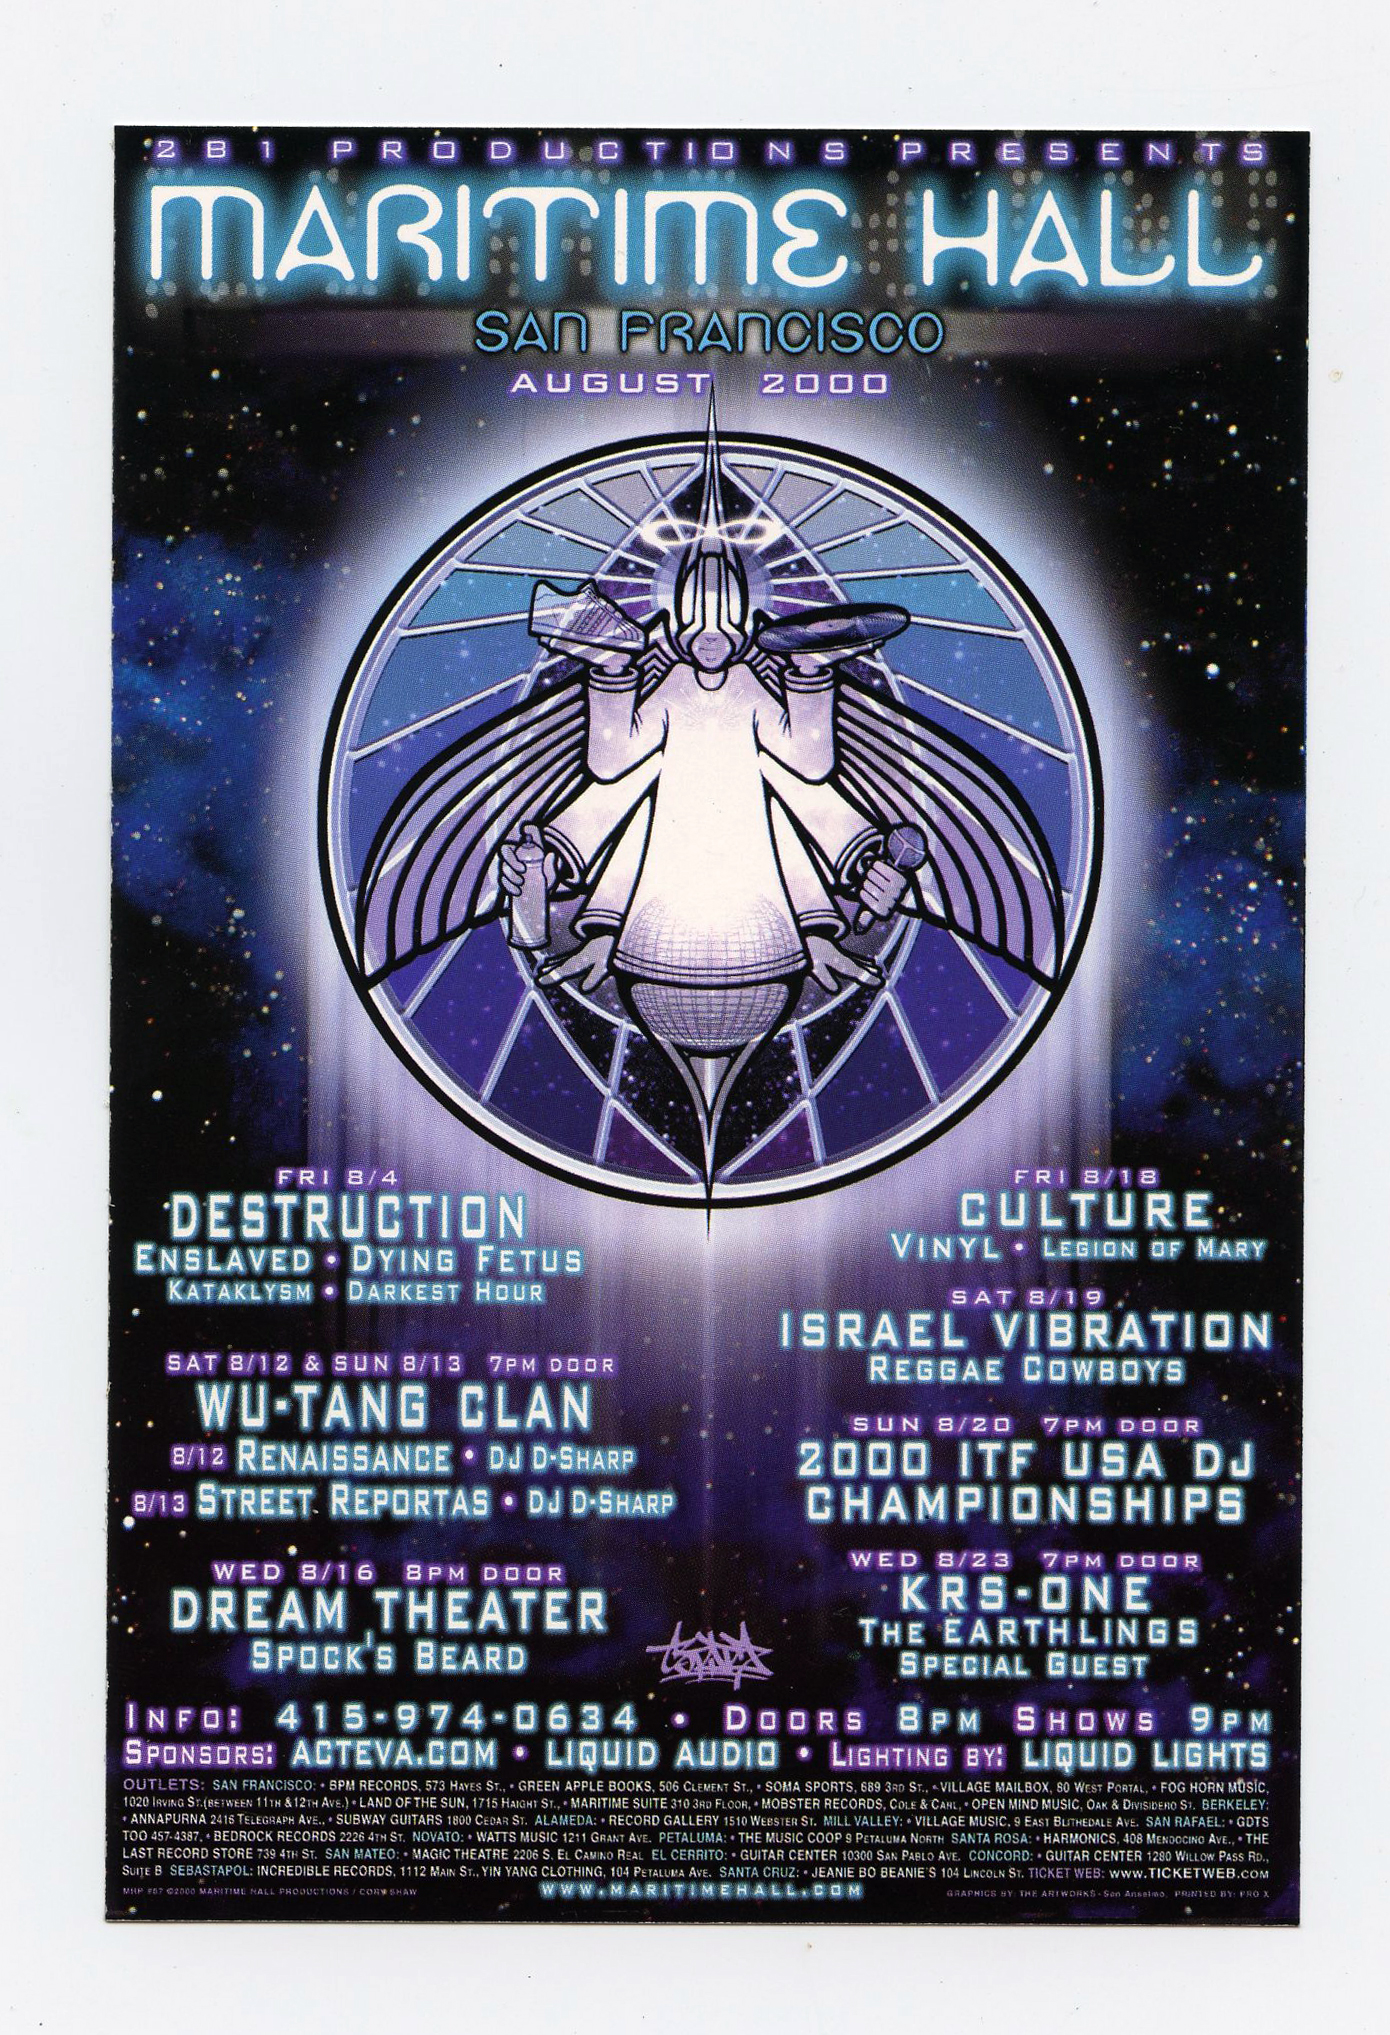 Maritime Hall 2000 Aug Handbill Wu-Tang Clan Destruction Dream Theater KRS-One Israel Vibration